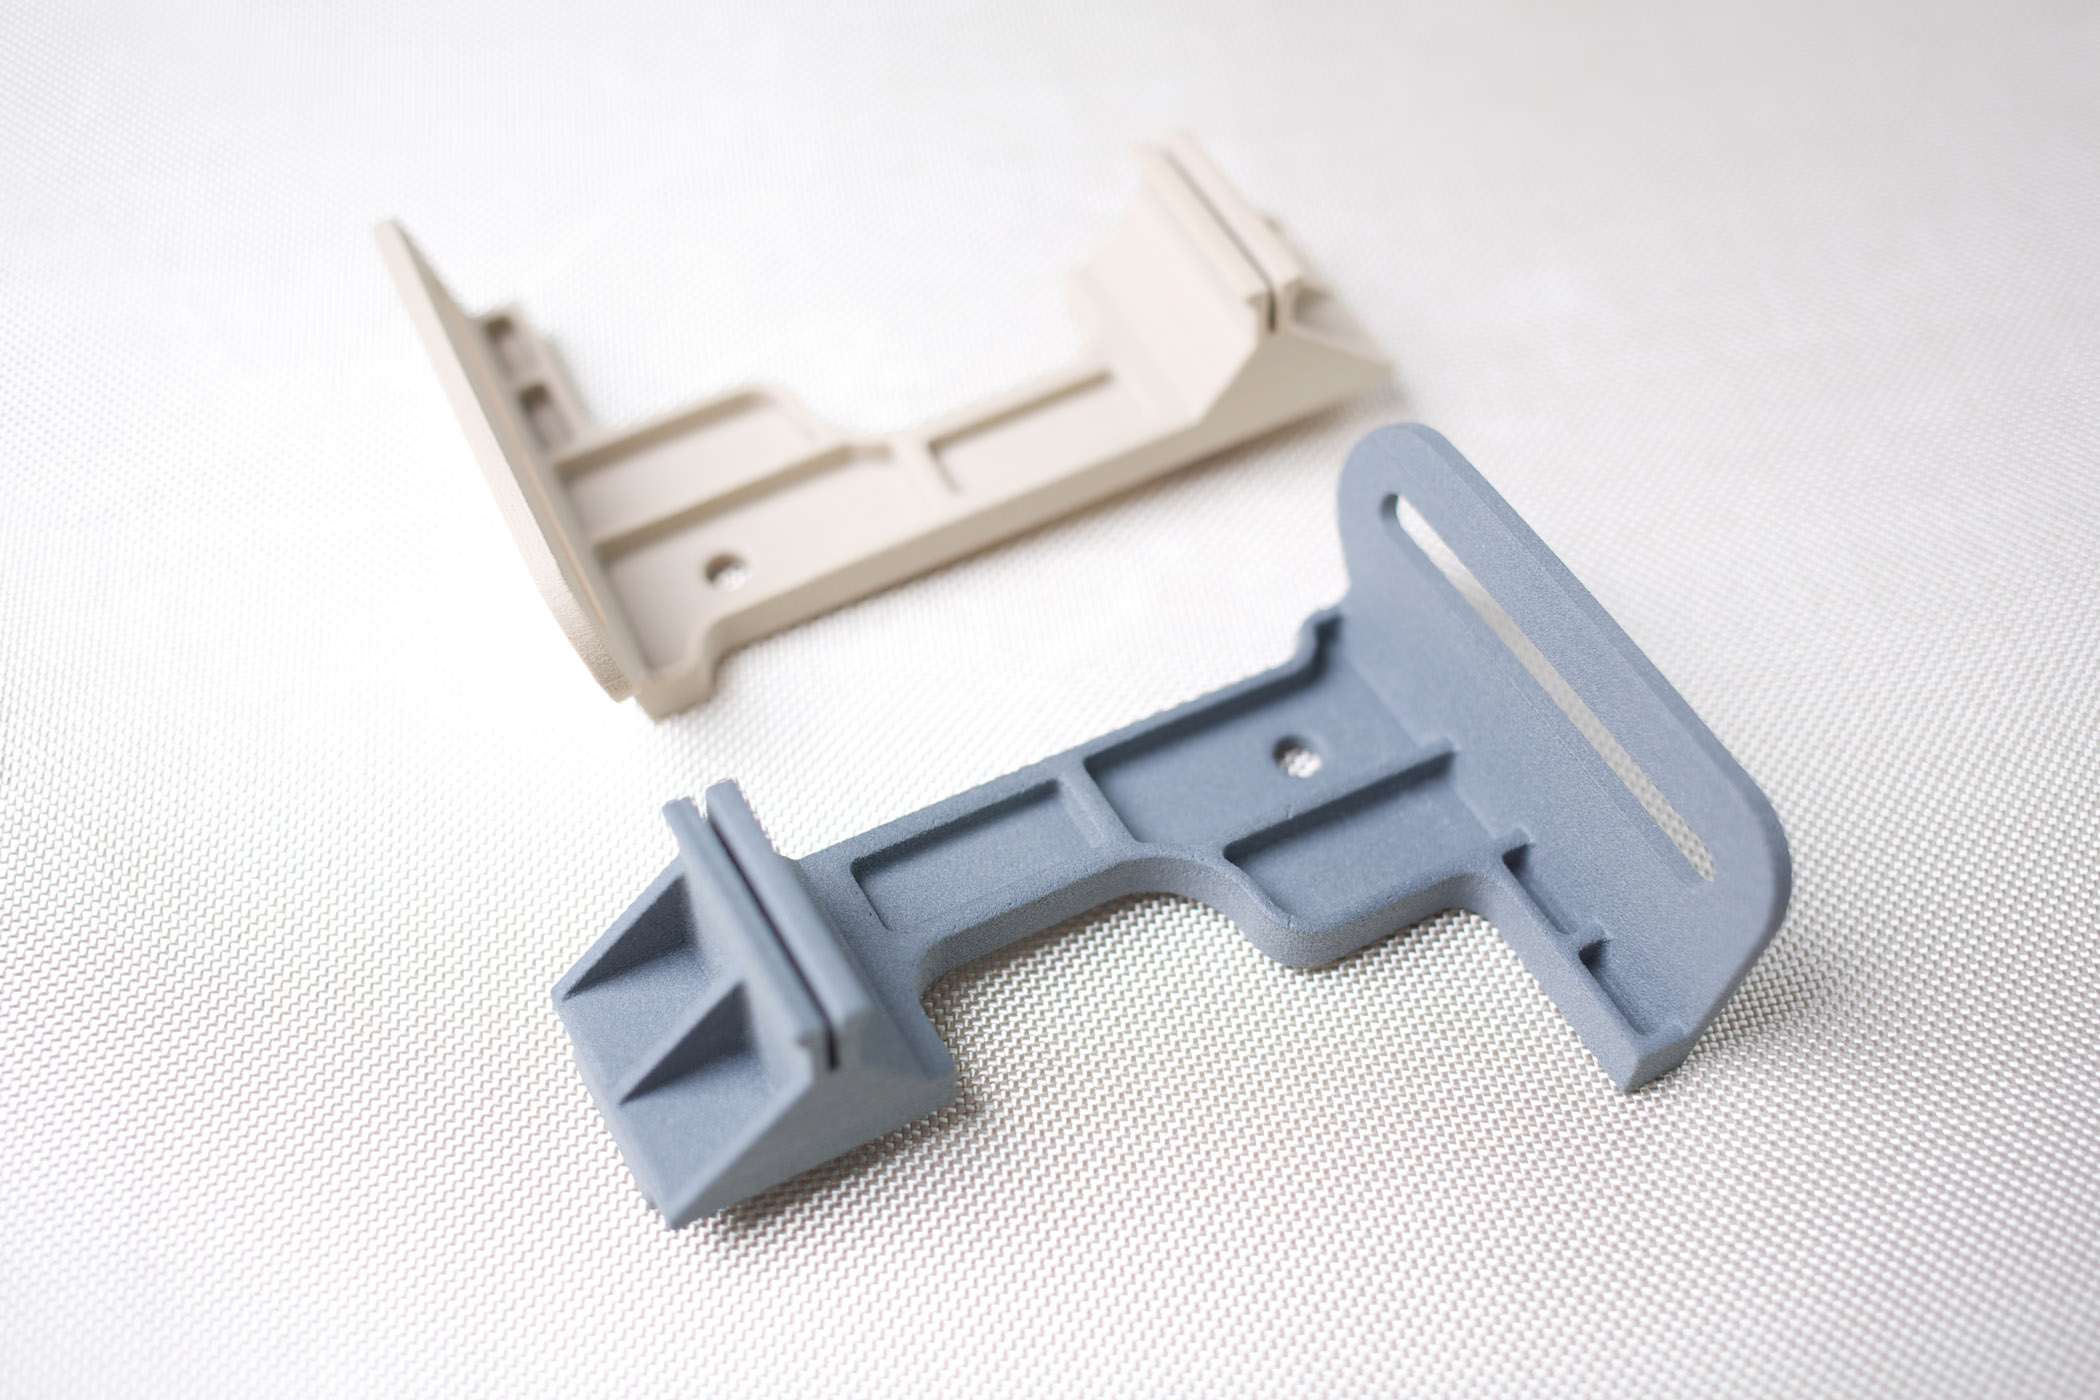 3D printed PAEK brackets for aerospace.